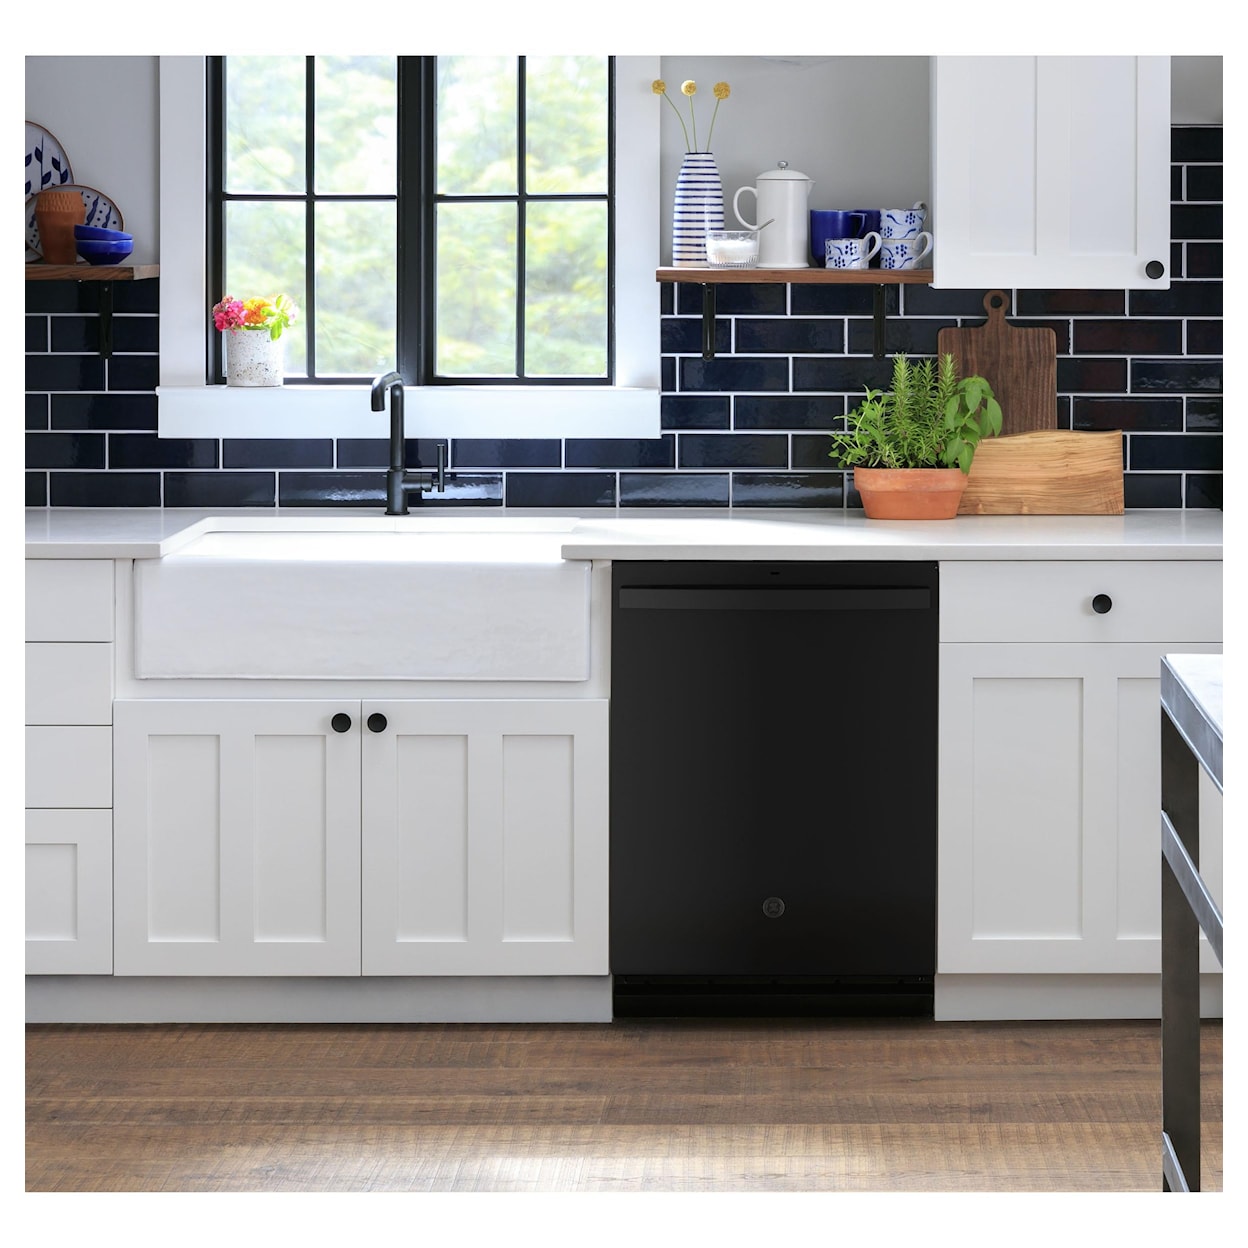 GE Appliances Dishwashers Built In Dishwasher